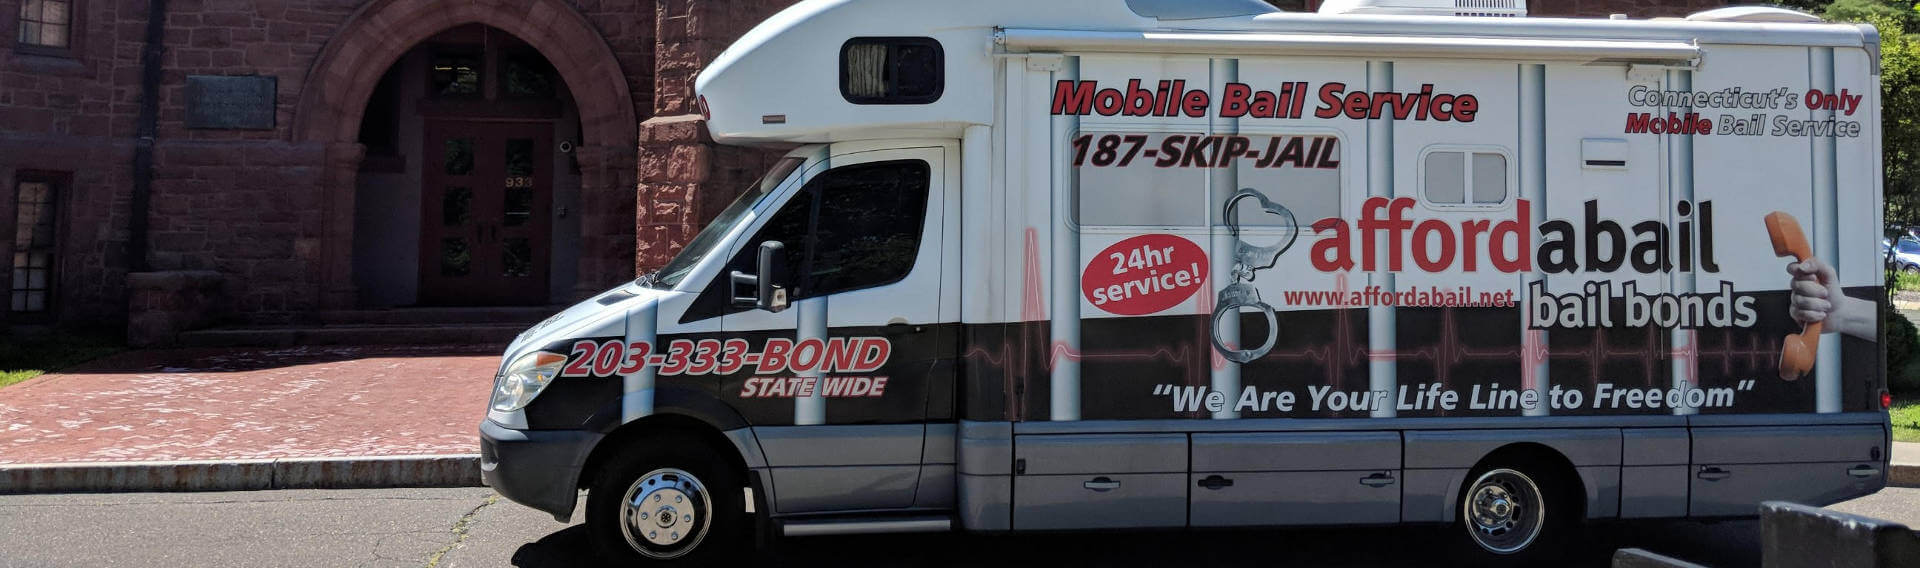 Mobile bail bonds service in Torrington CT